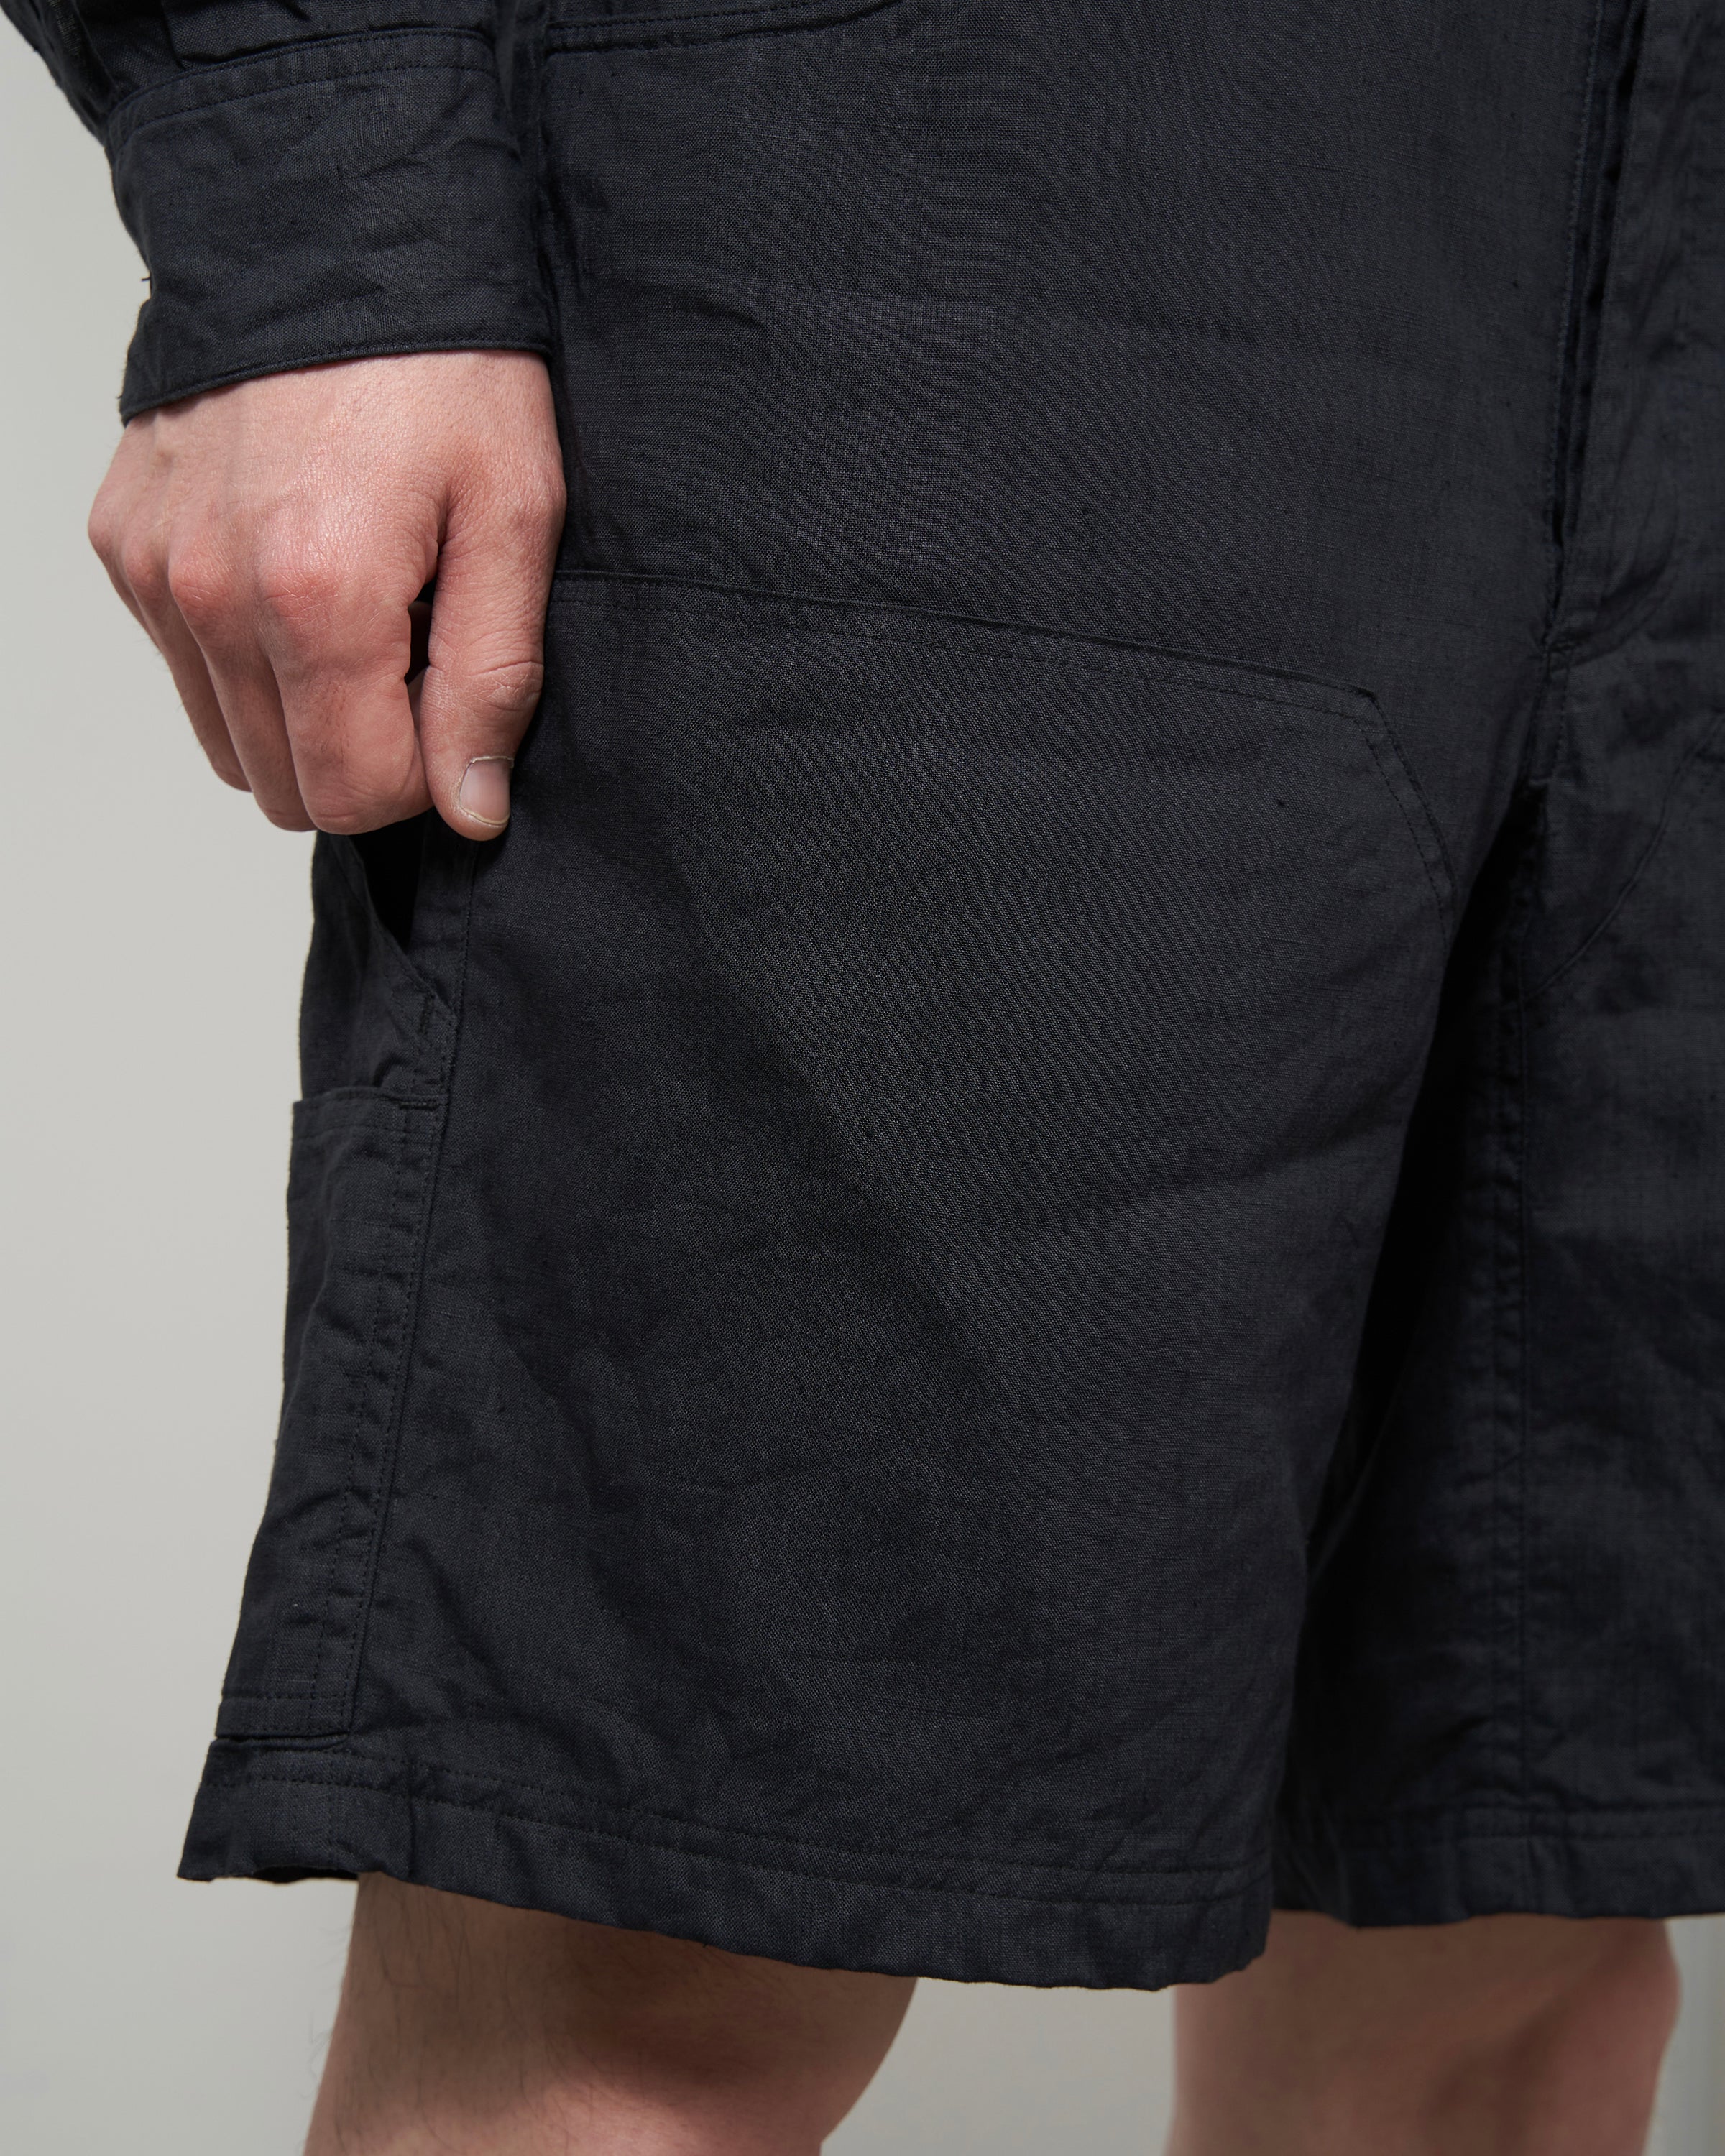 S H DKNS-004 Double Knee Shorts(Linen Garment Dye), Ink Black